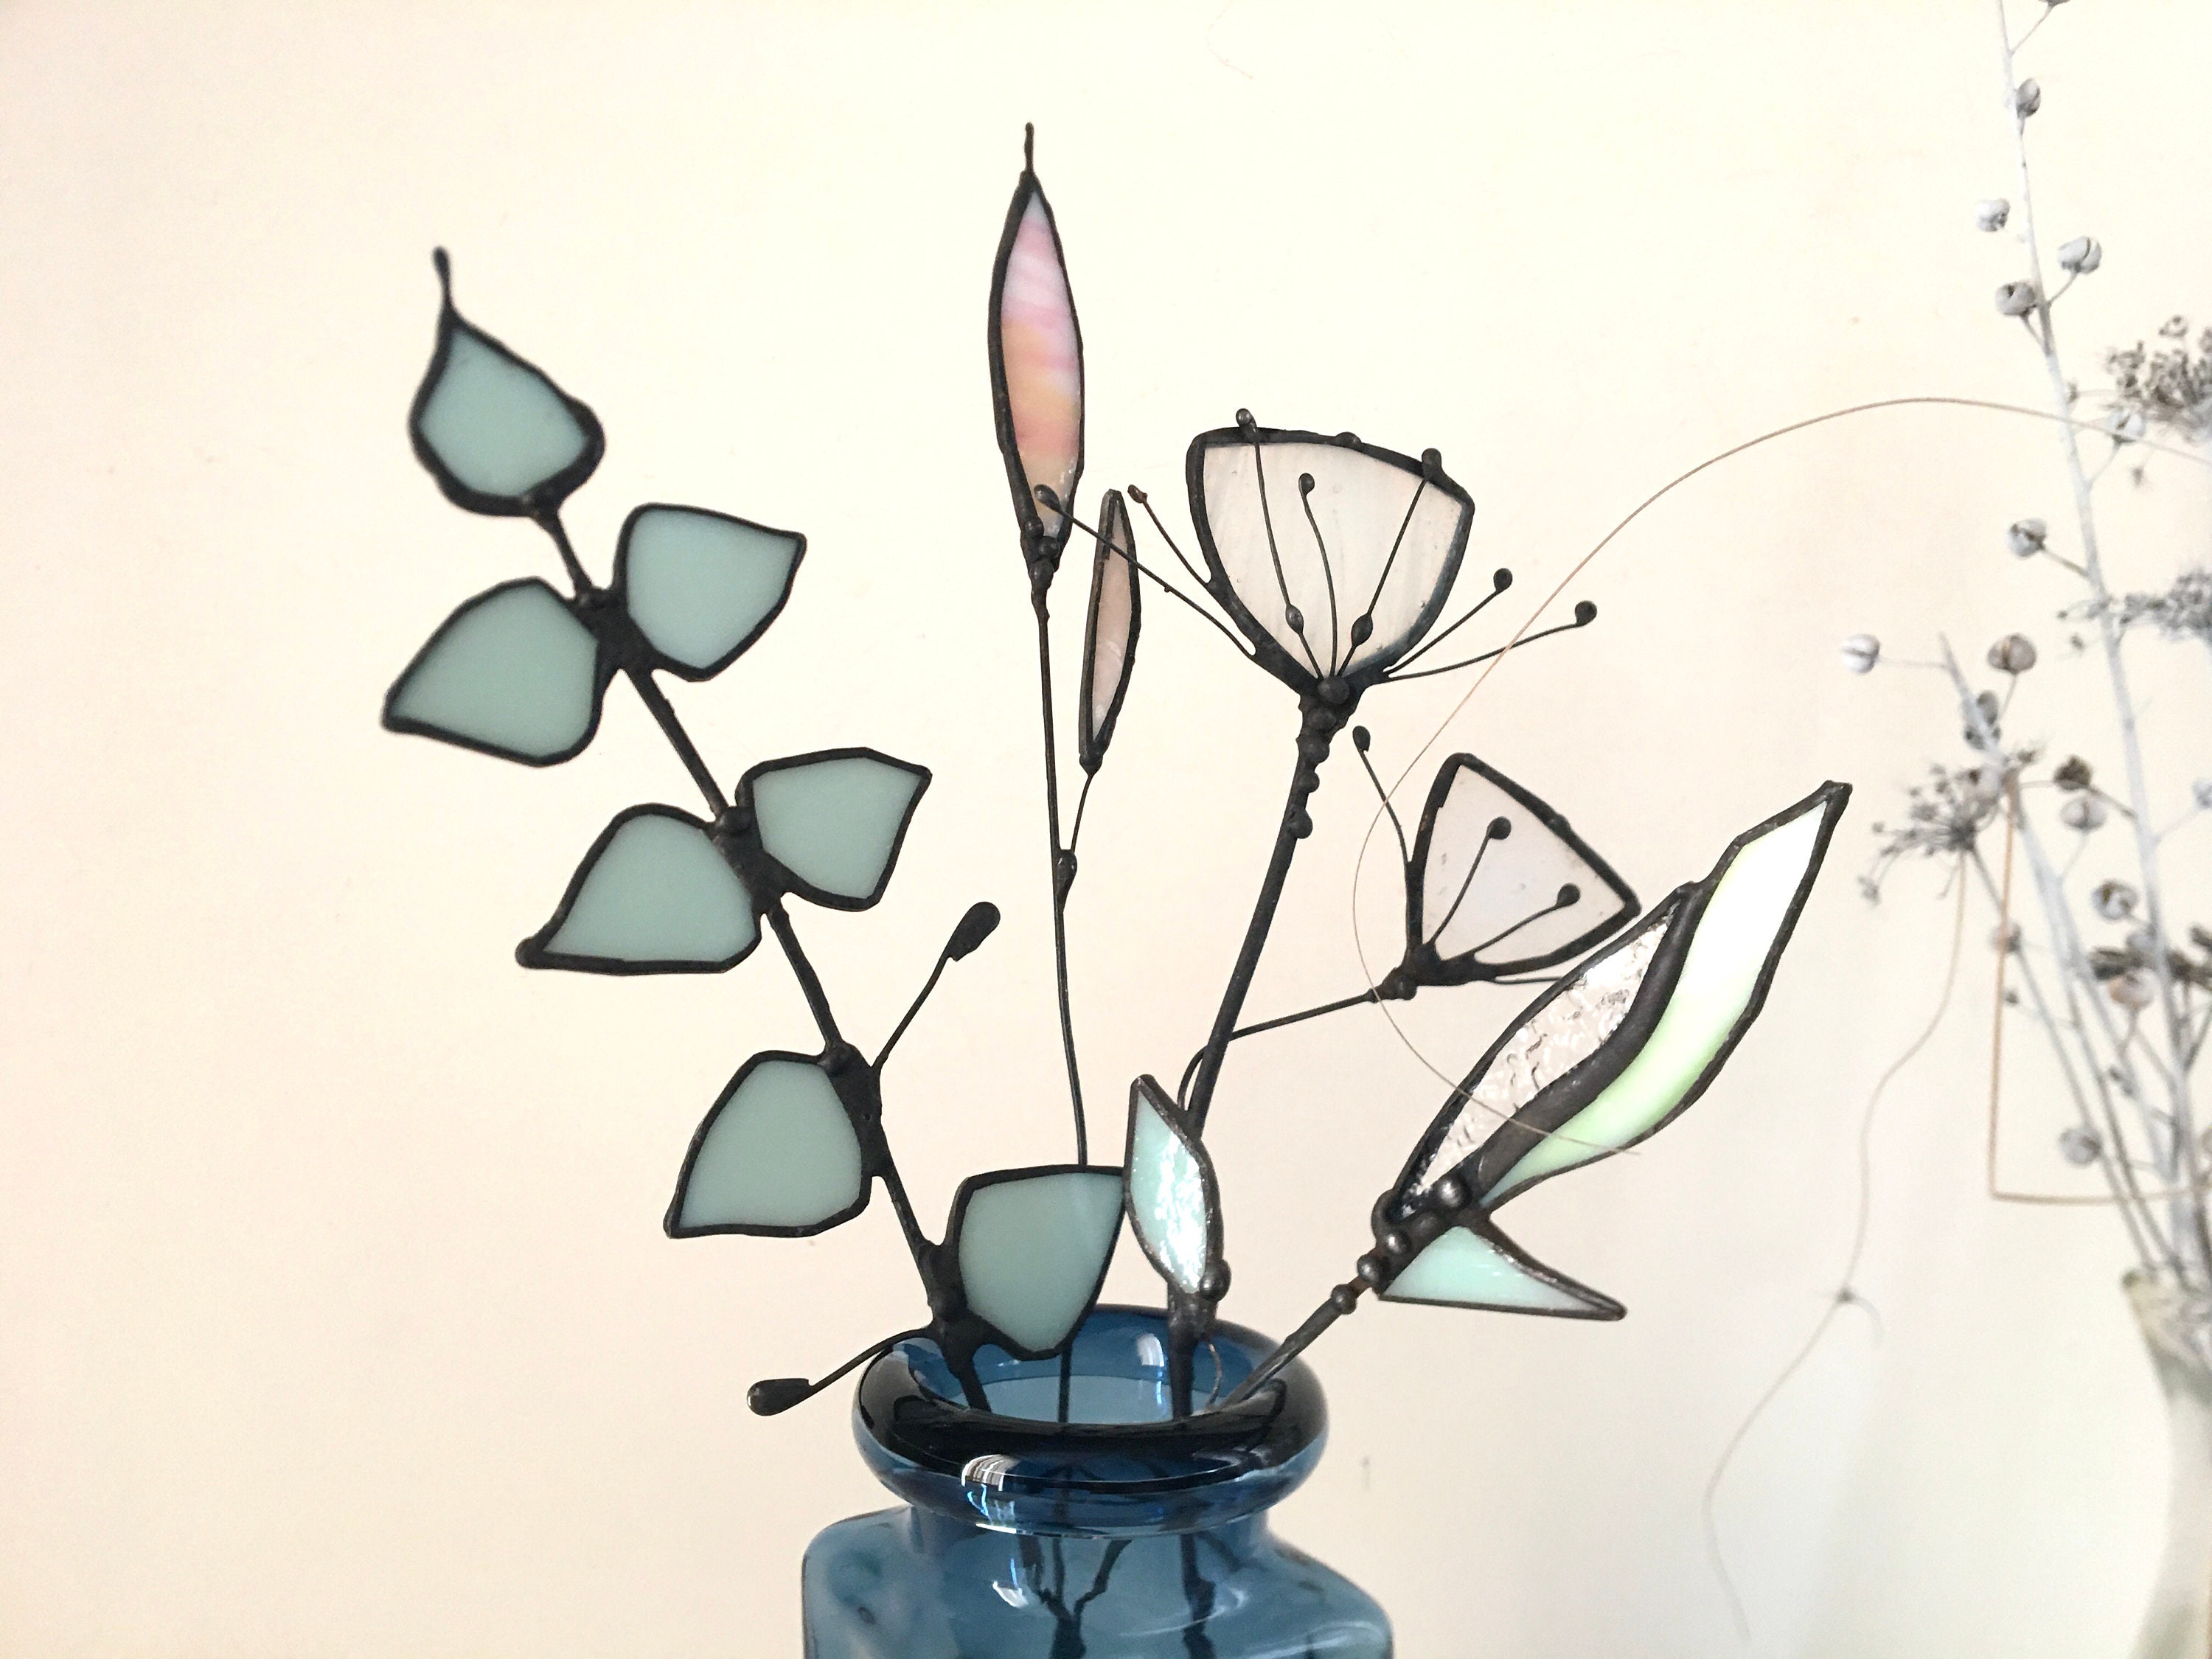 Stained Glass Flowers - Everlasting Wildflower  - Folksy